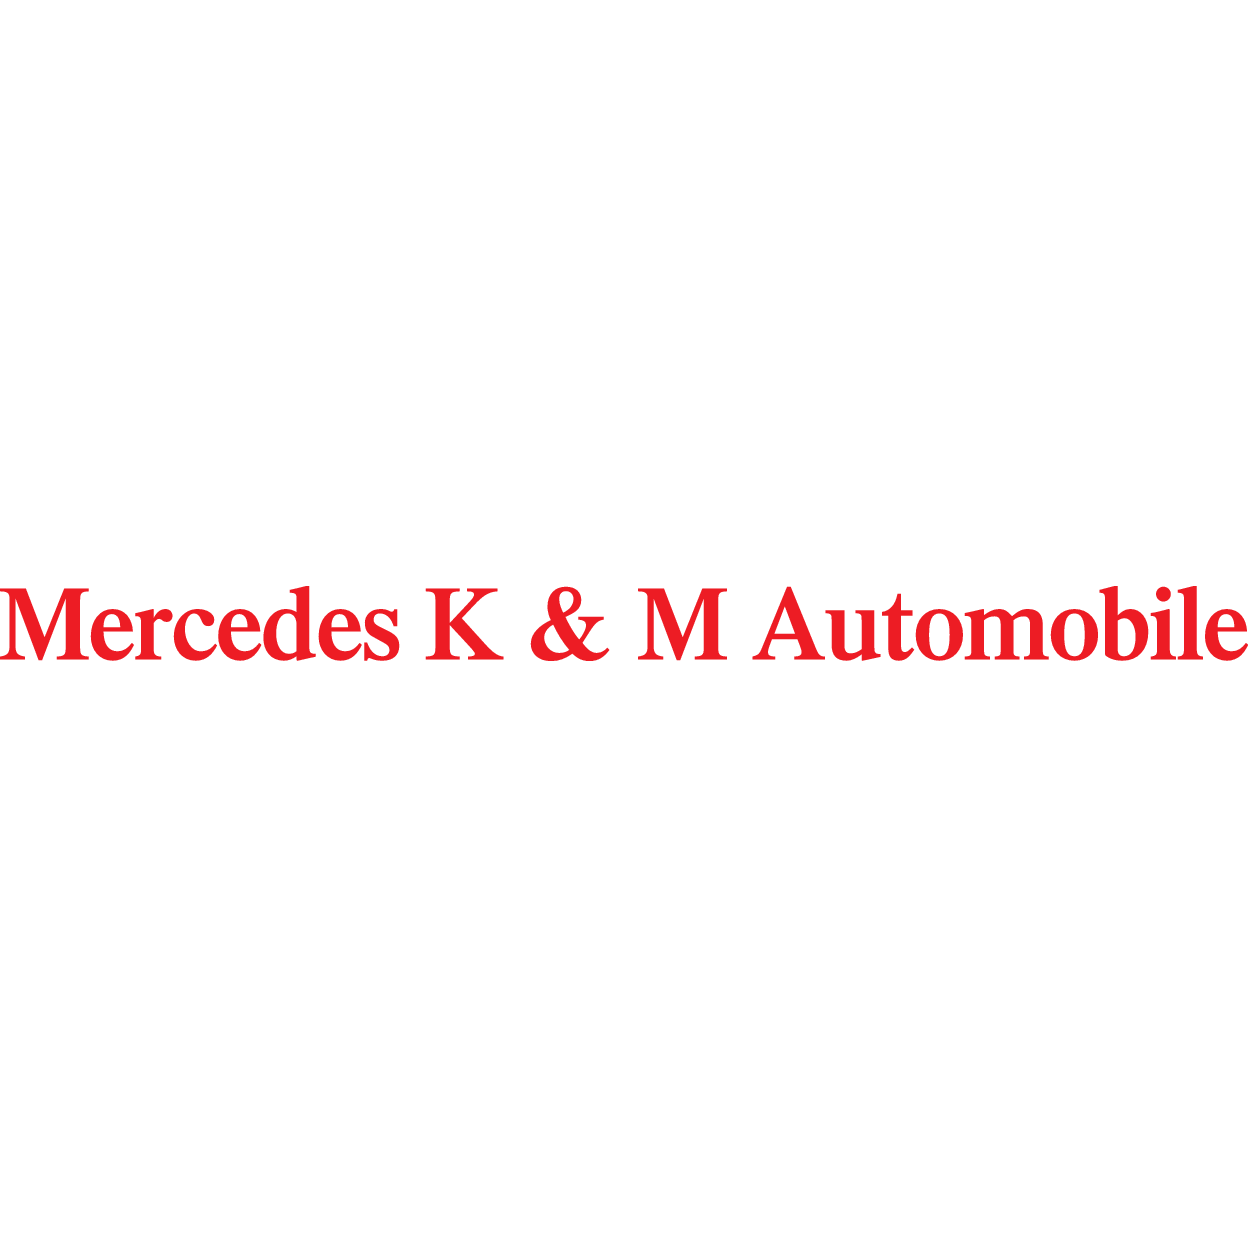 Logo K&M Automobile Mercedesteile